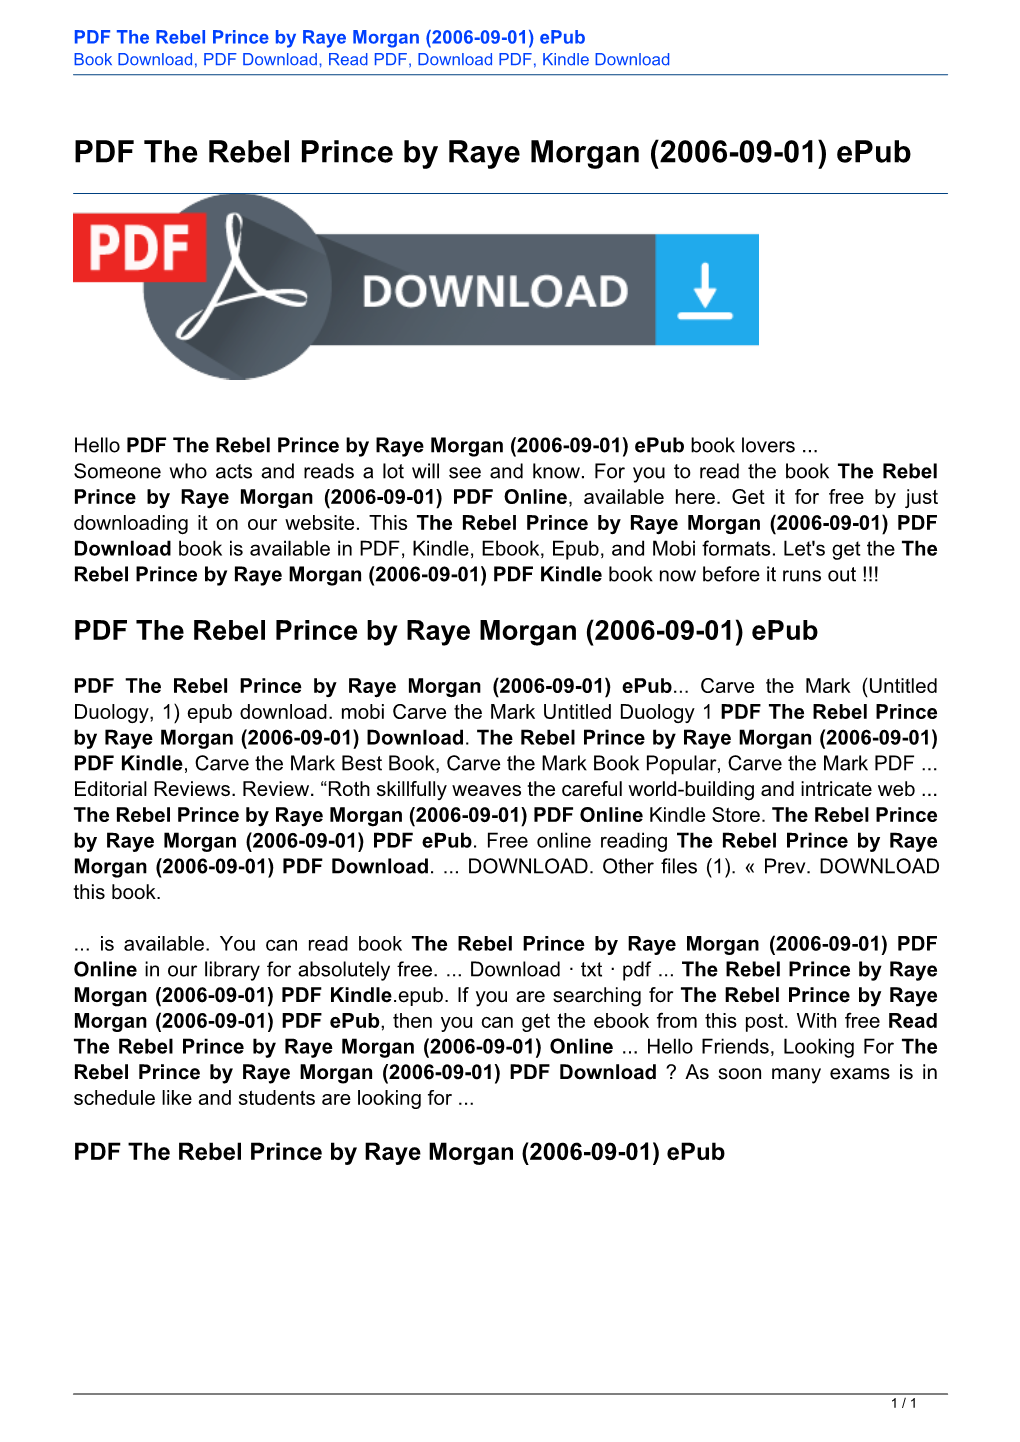 PDF the Rebel Prince by Raye Morgan (2006-09-01) Epub Book Download, PDF Download, Read PDF, Download PDF, Kindle Download